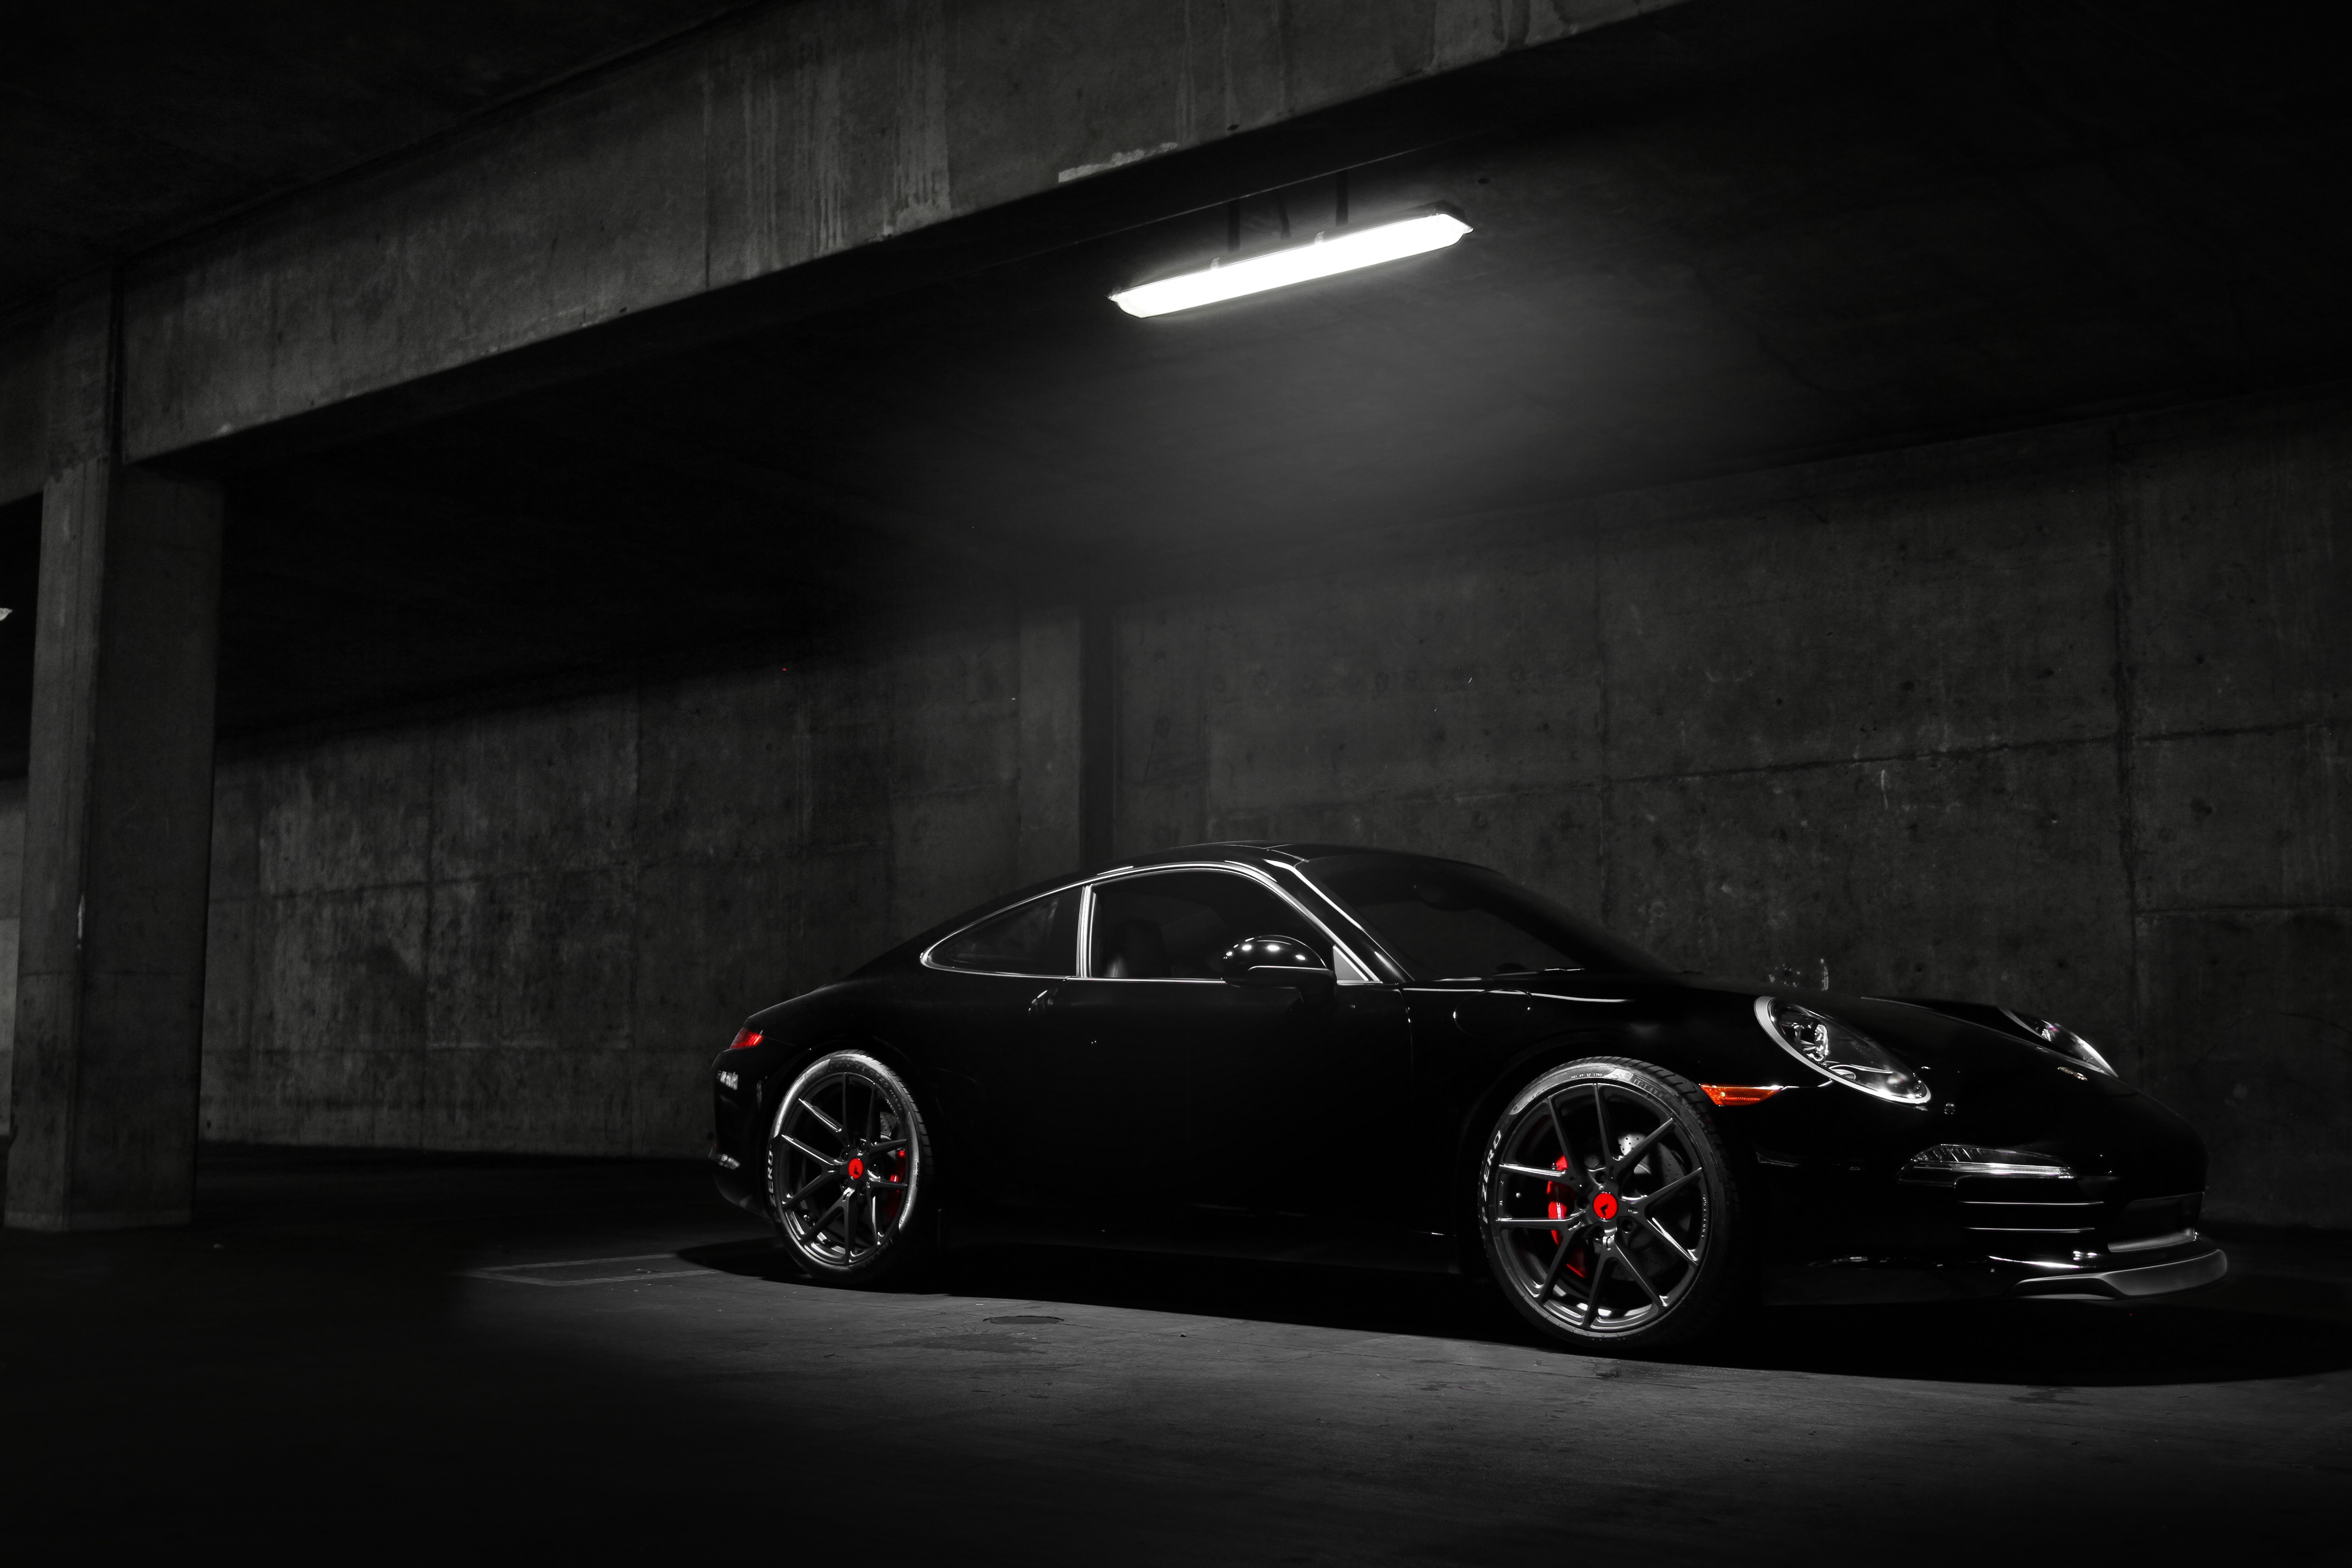 Black Cars Porsche 911 Carrera S Vehicle Car Porsche 5184x3456